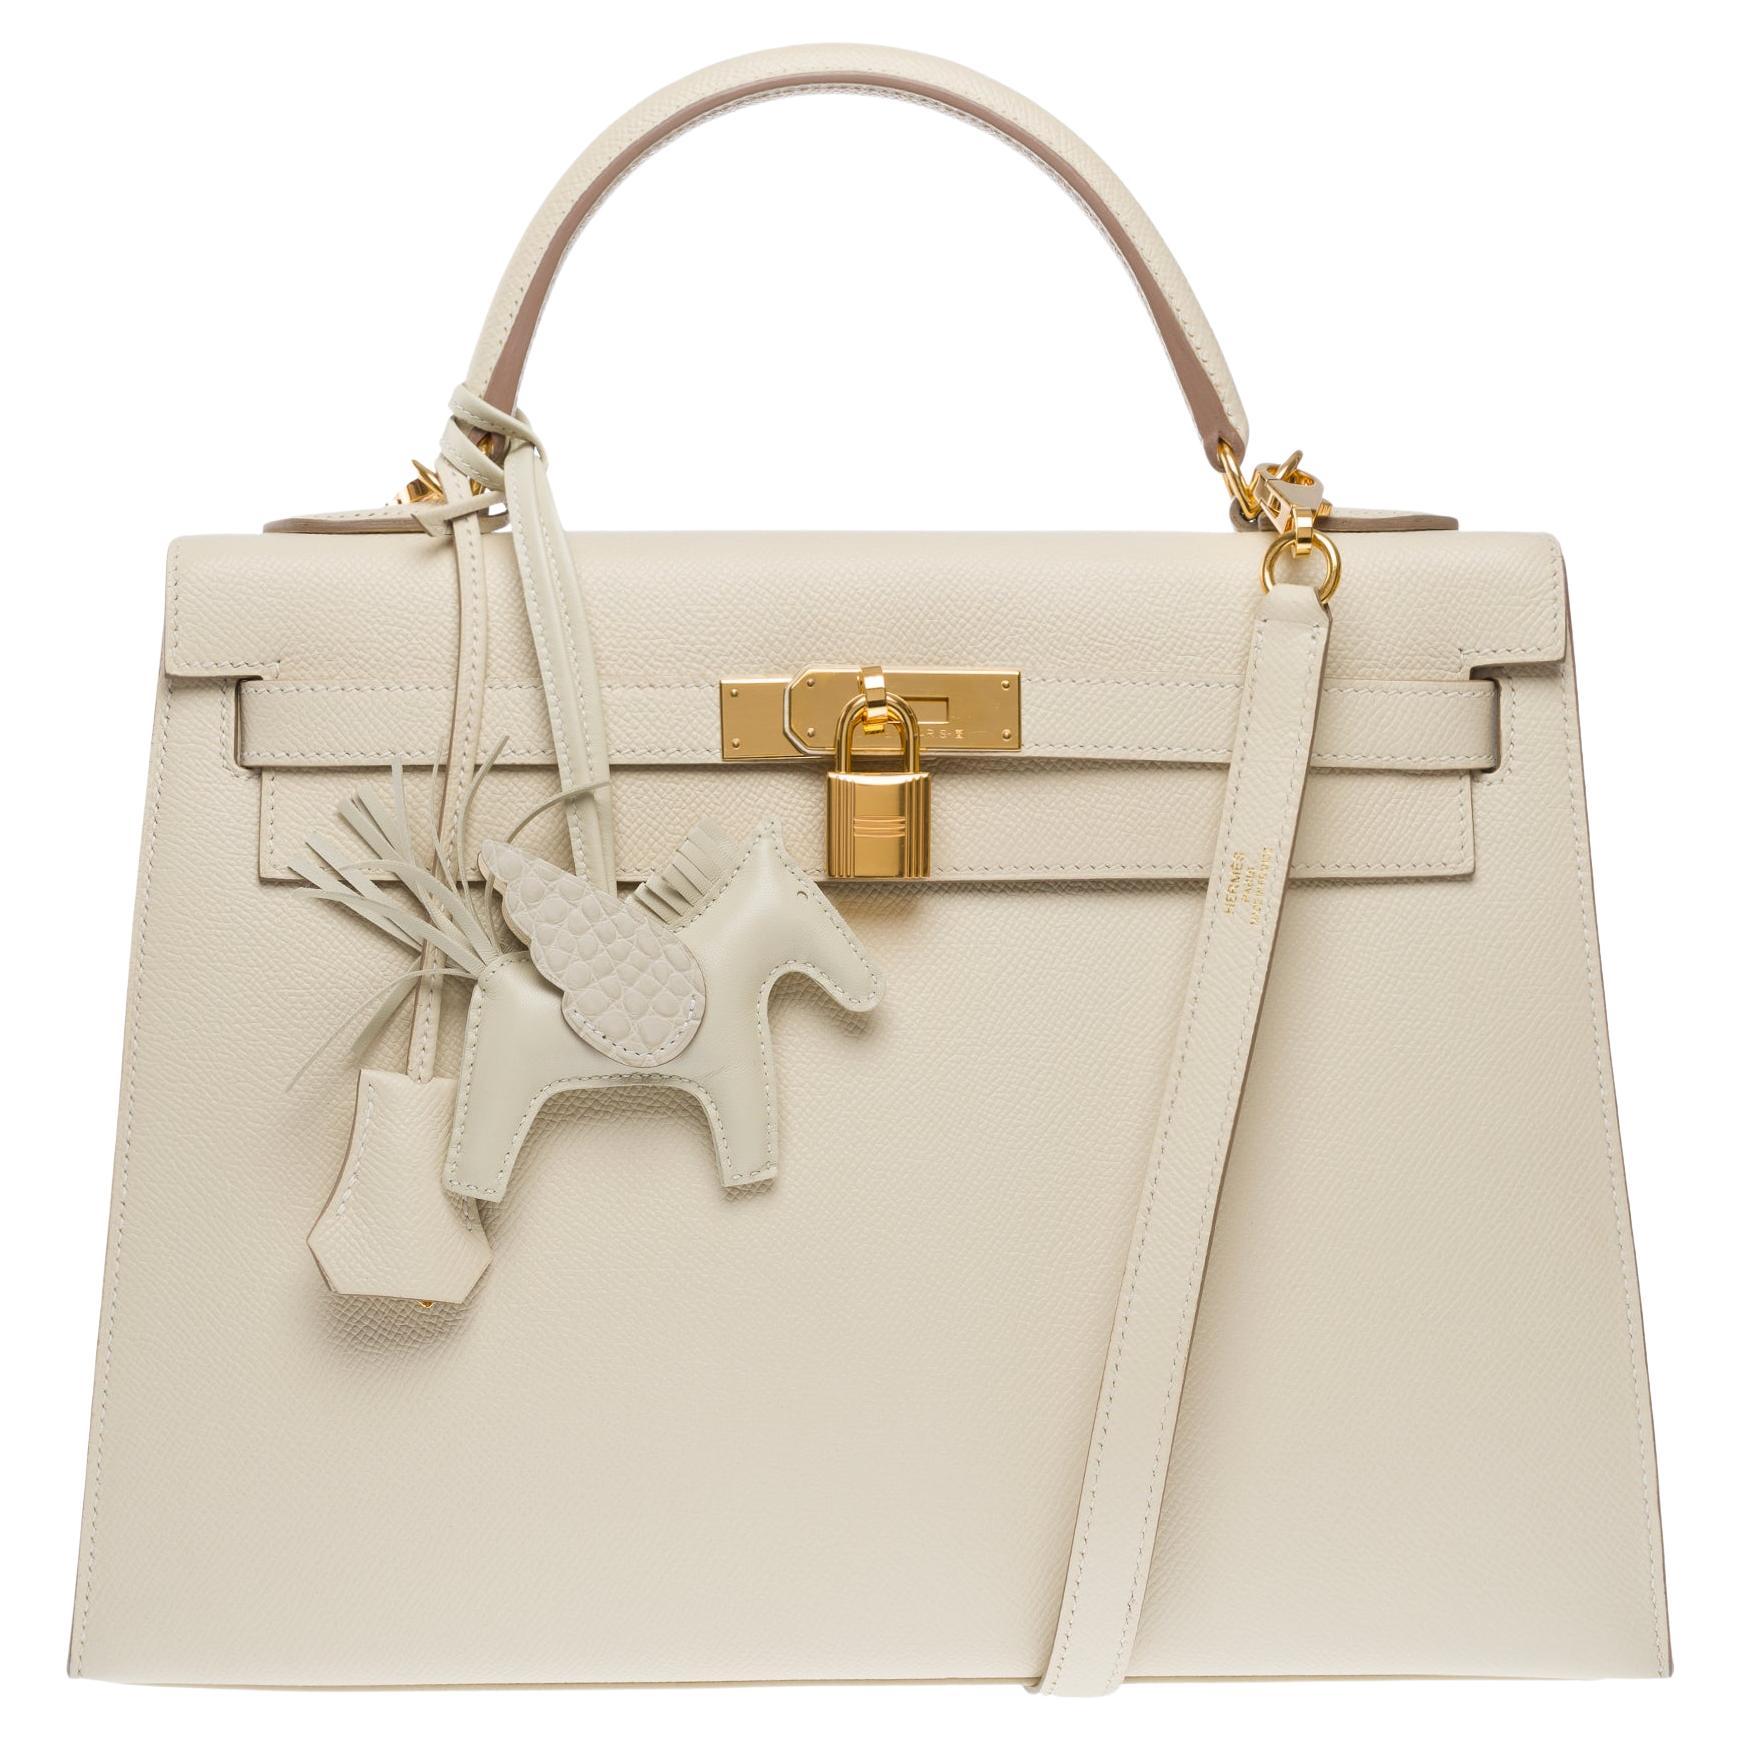 Stunning Hermès Kelly 32 sellier handbag strap in Craie epsom leather, GHW